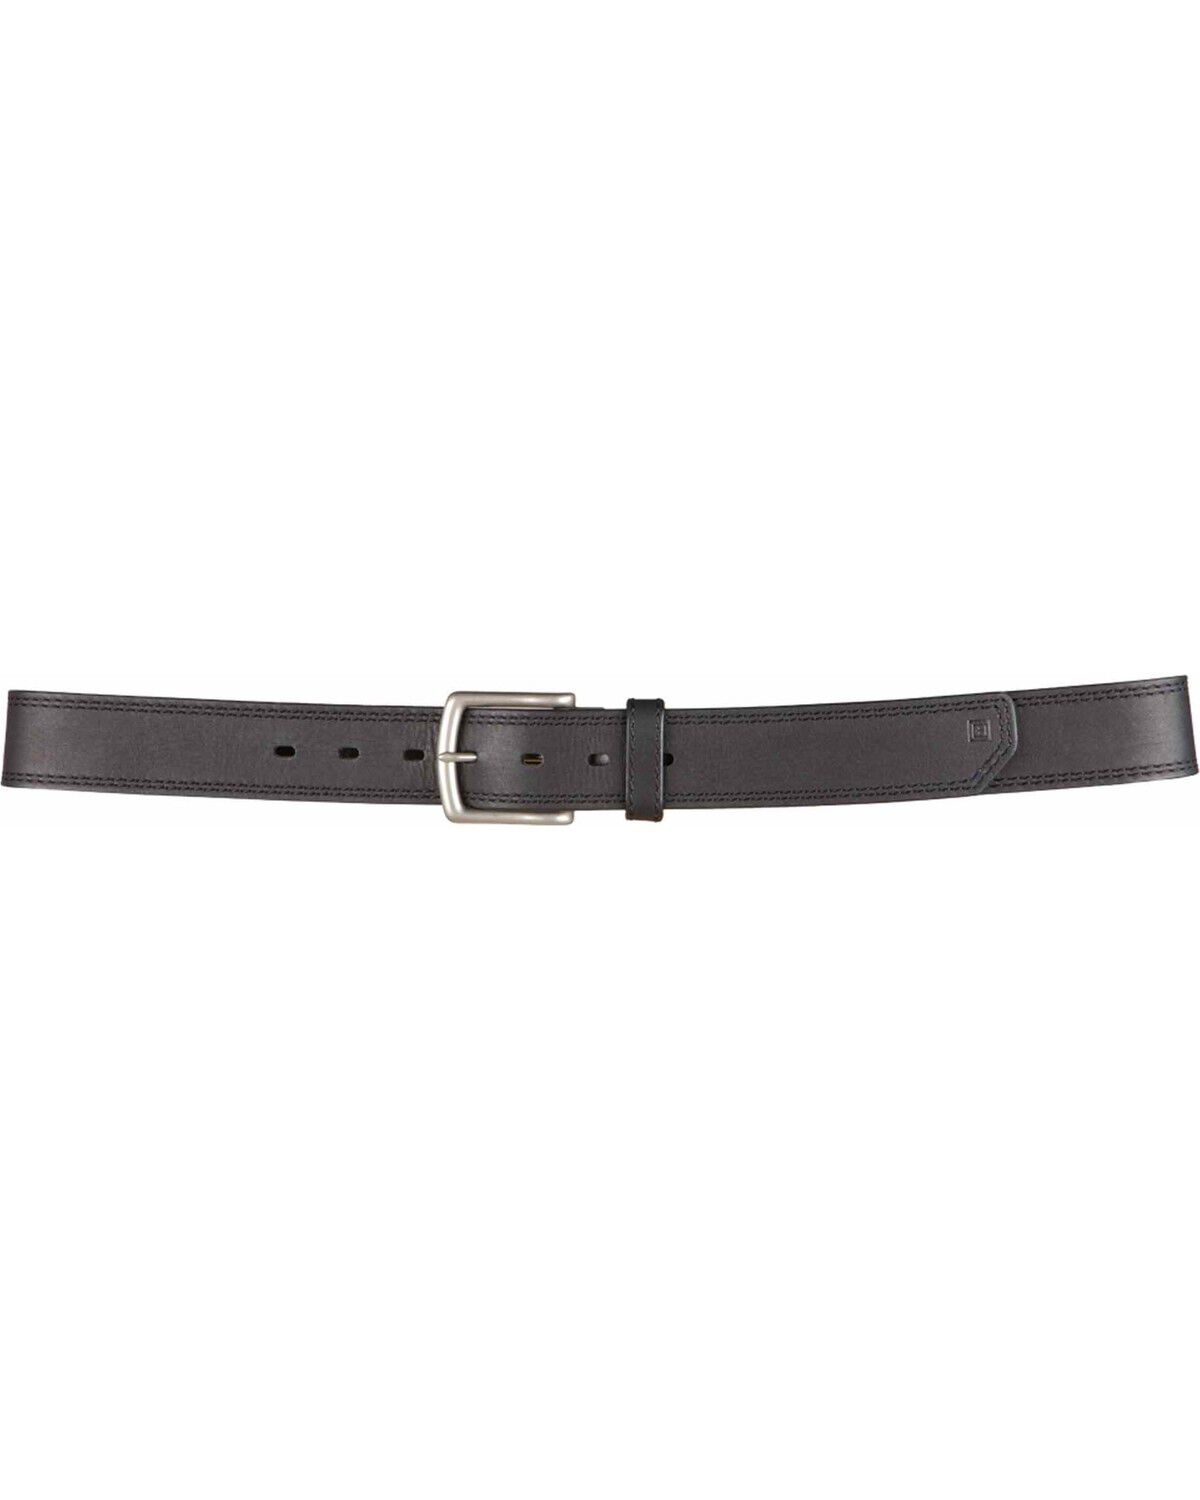 5.11 tactical leather belt